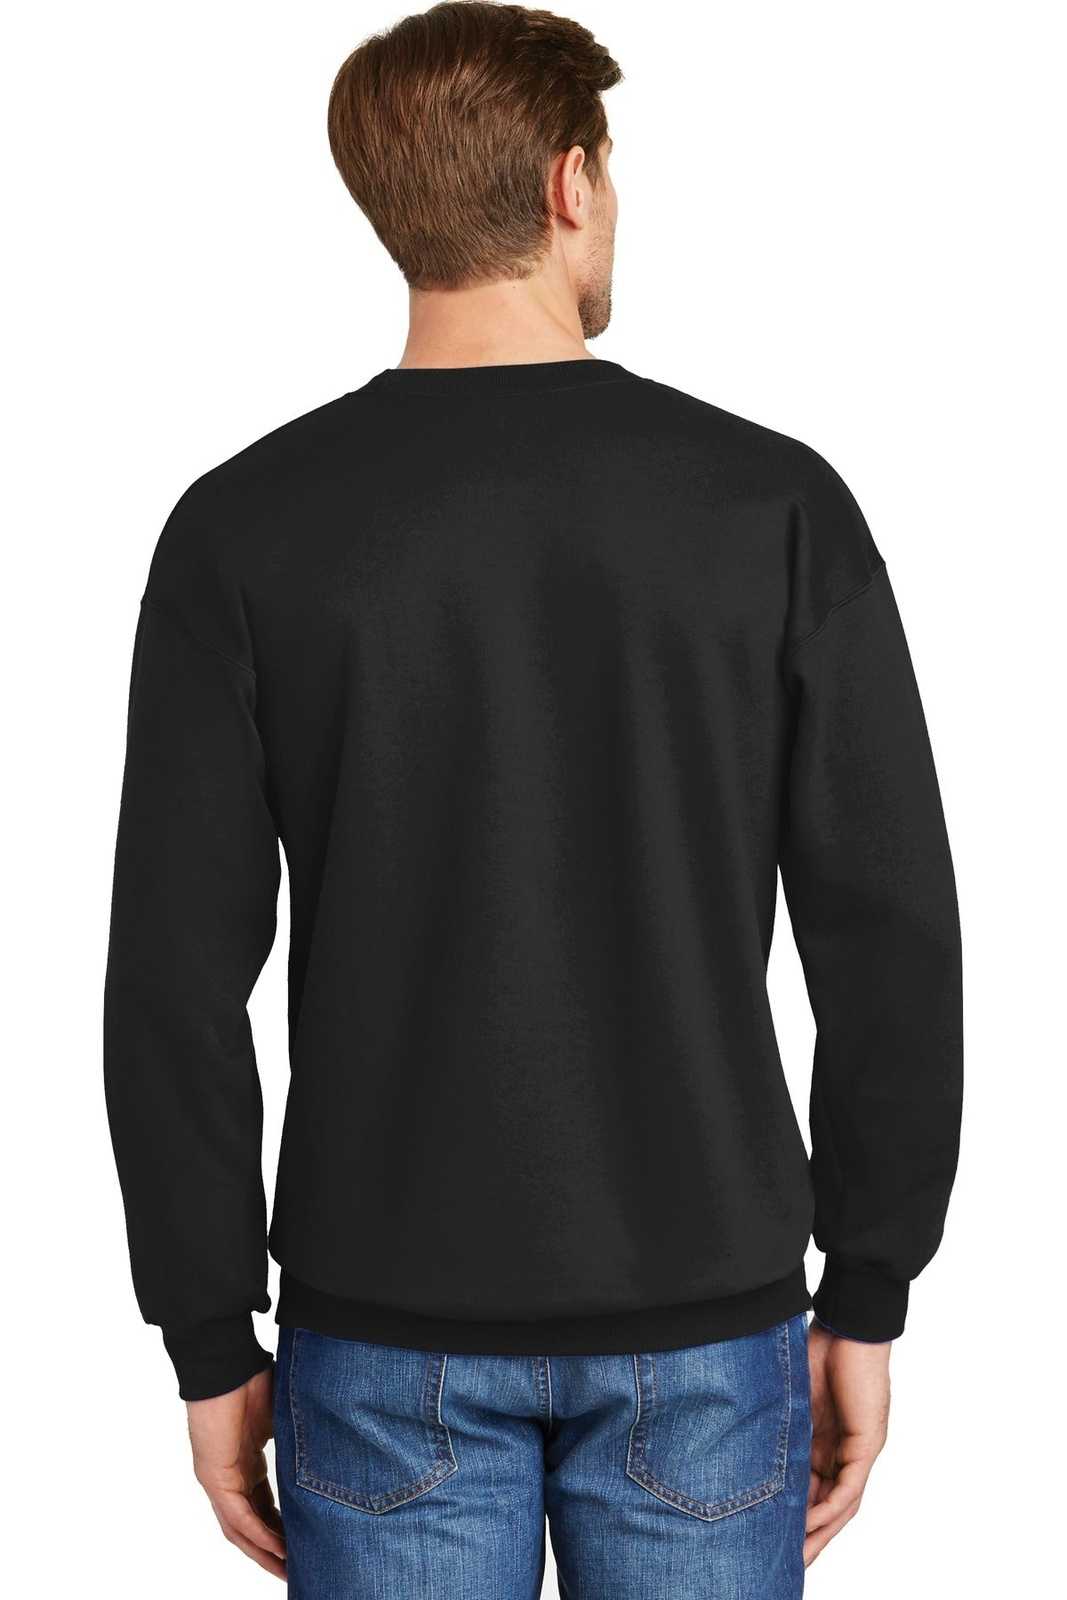 Hanes F260 Ultimate Cotton Crewneck Sweatshirt - Black - HIT a Double